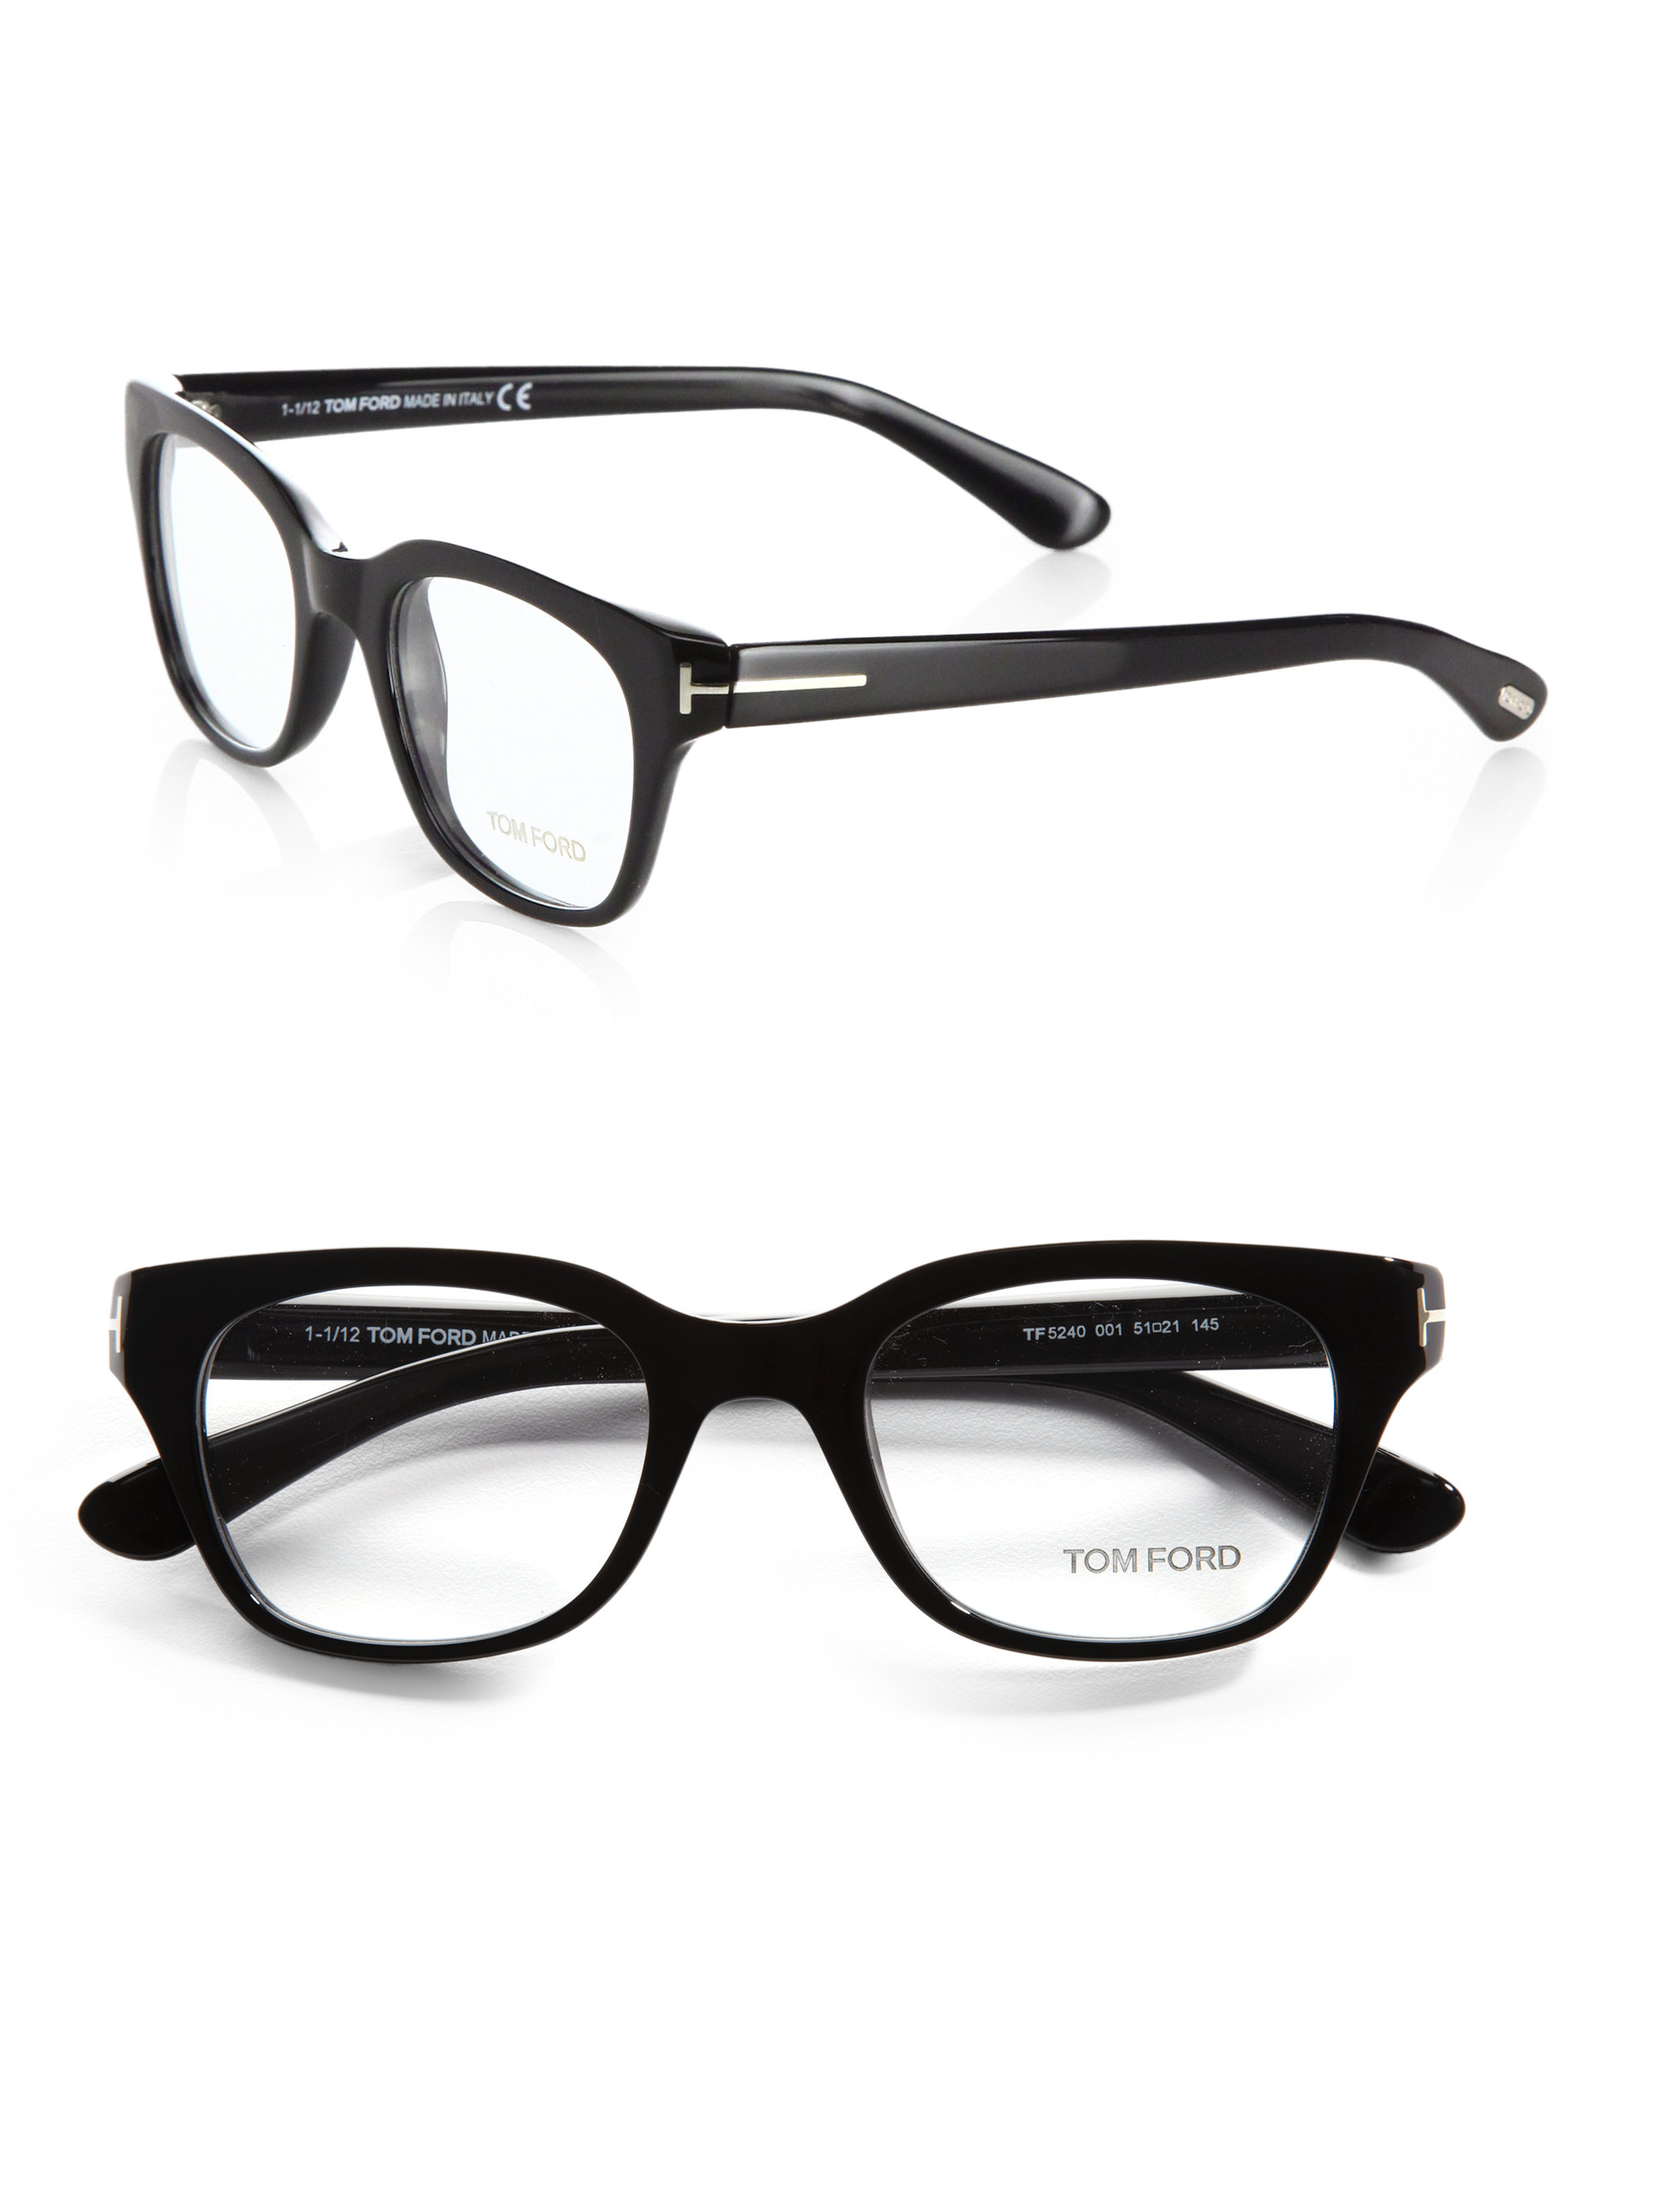 Lyst - Tom Ford 5240 Square Optical Frames in Black for Men